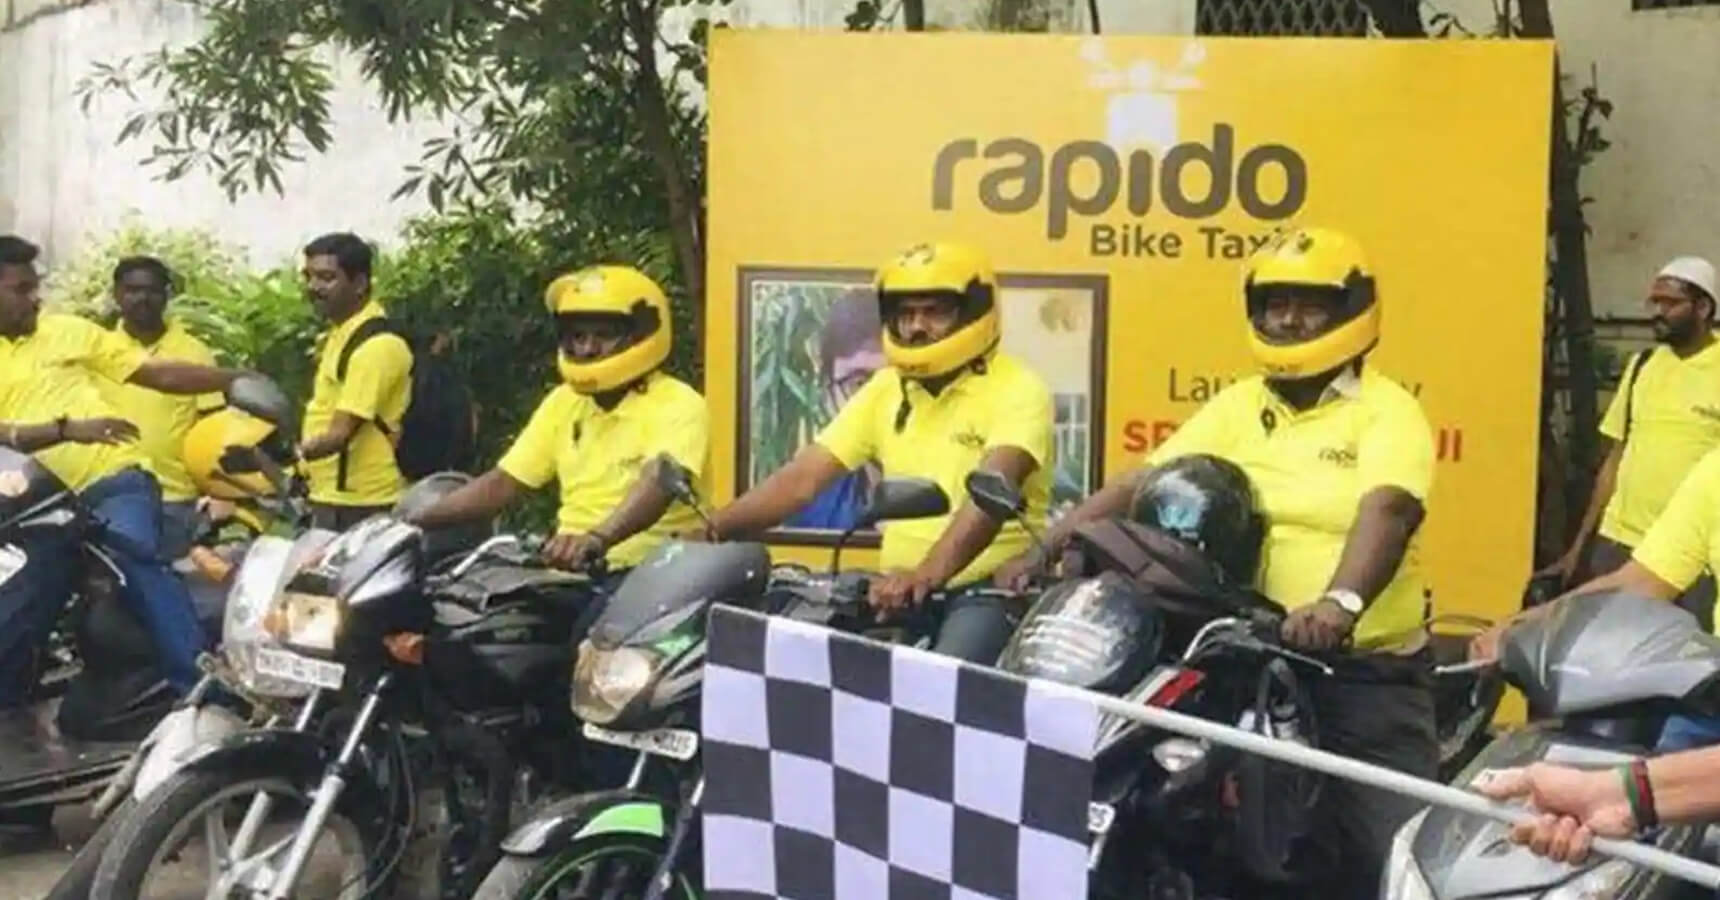 Ola Uber Rapido Bike Taxi Services Banned in Delhi